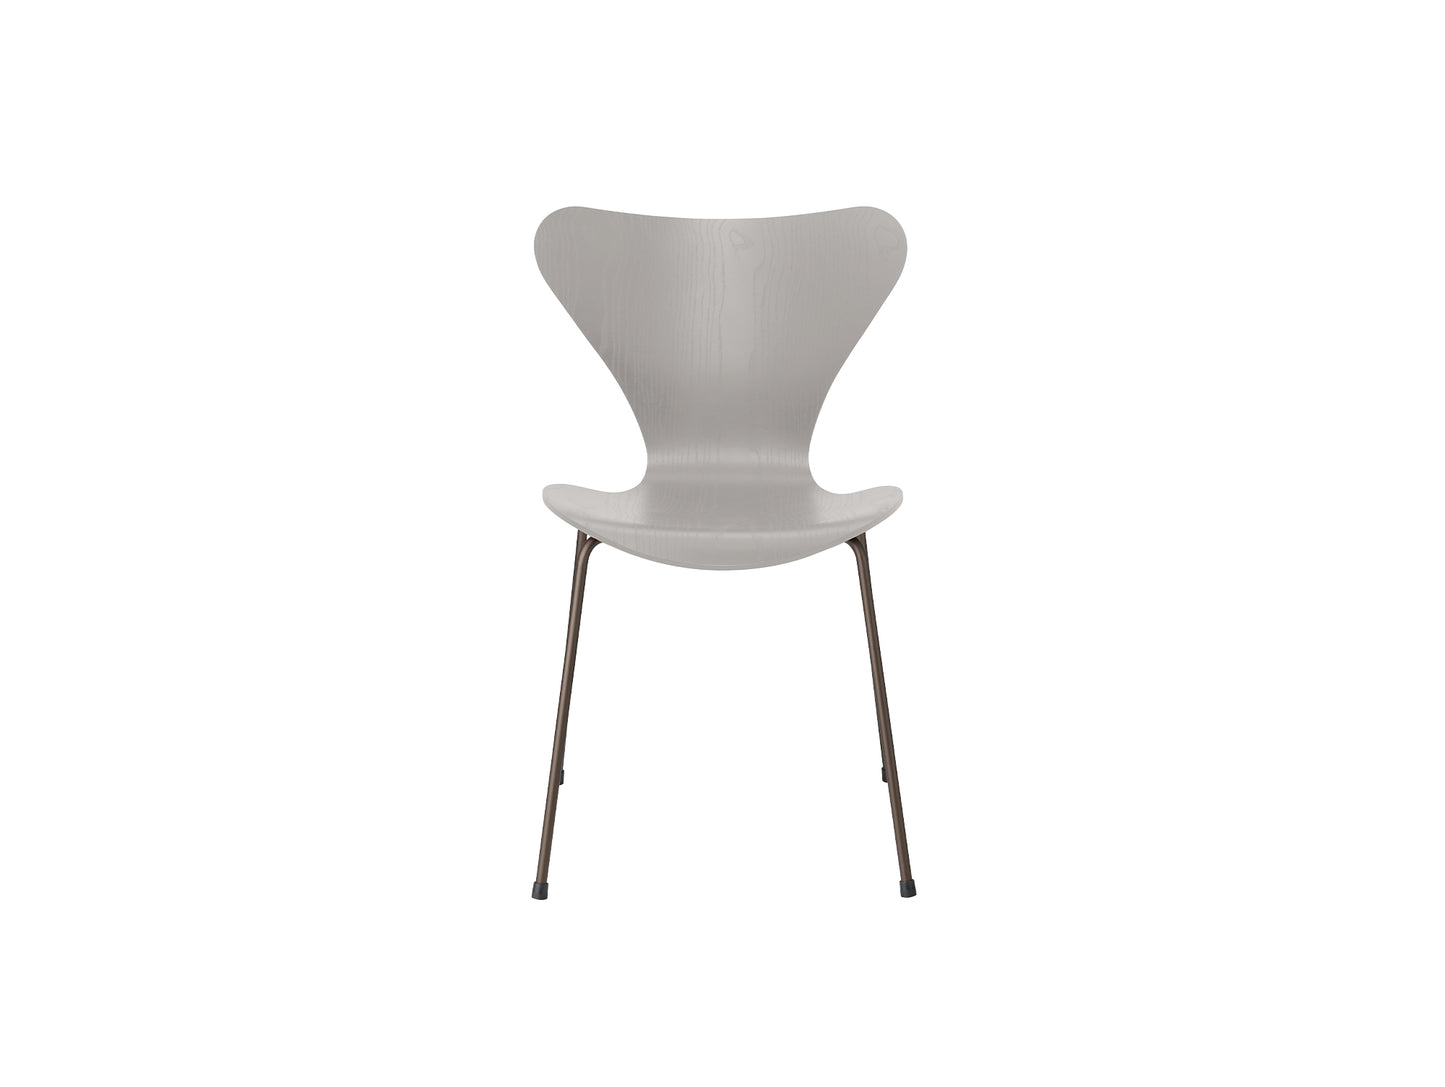 Series 7™ 3107 Dining Chair by Fritz Hansen - Nine Grey Coloured Ash Veneer Shell / Brown Bronze Steel